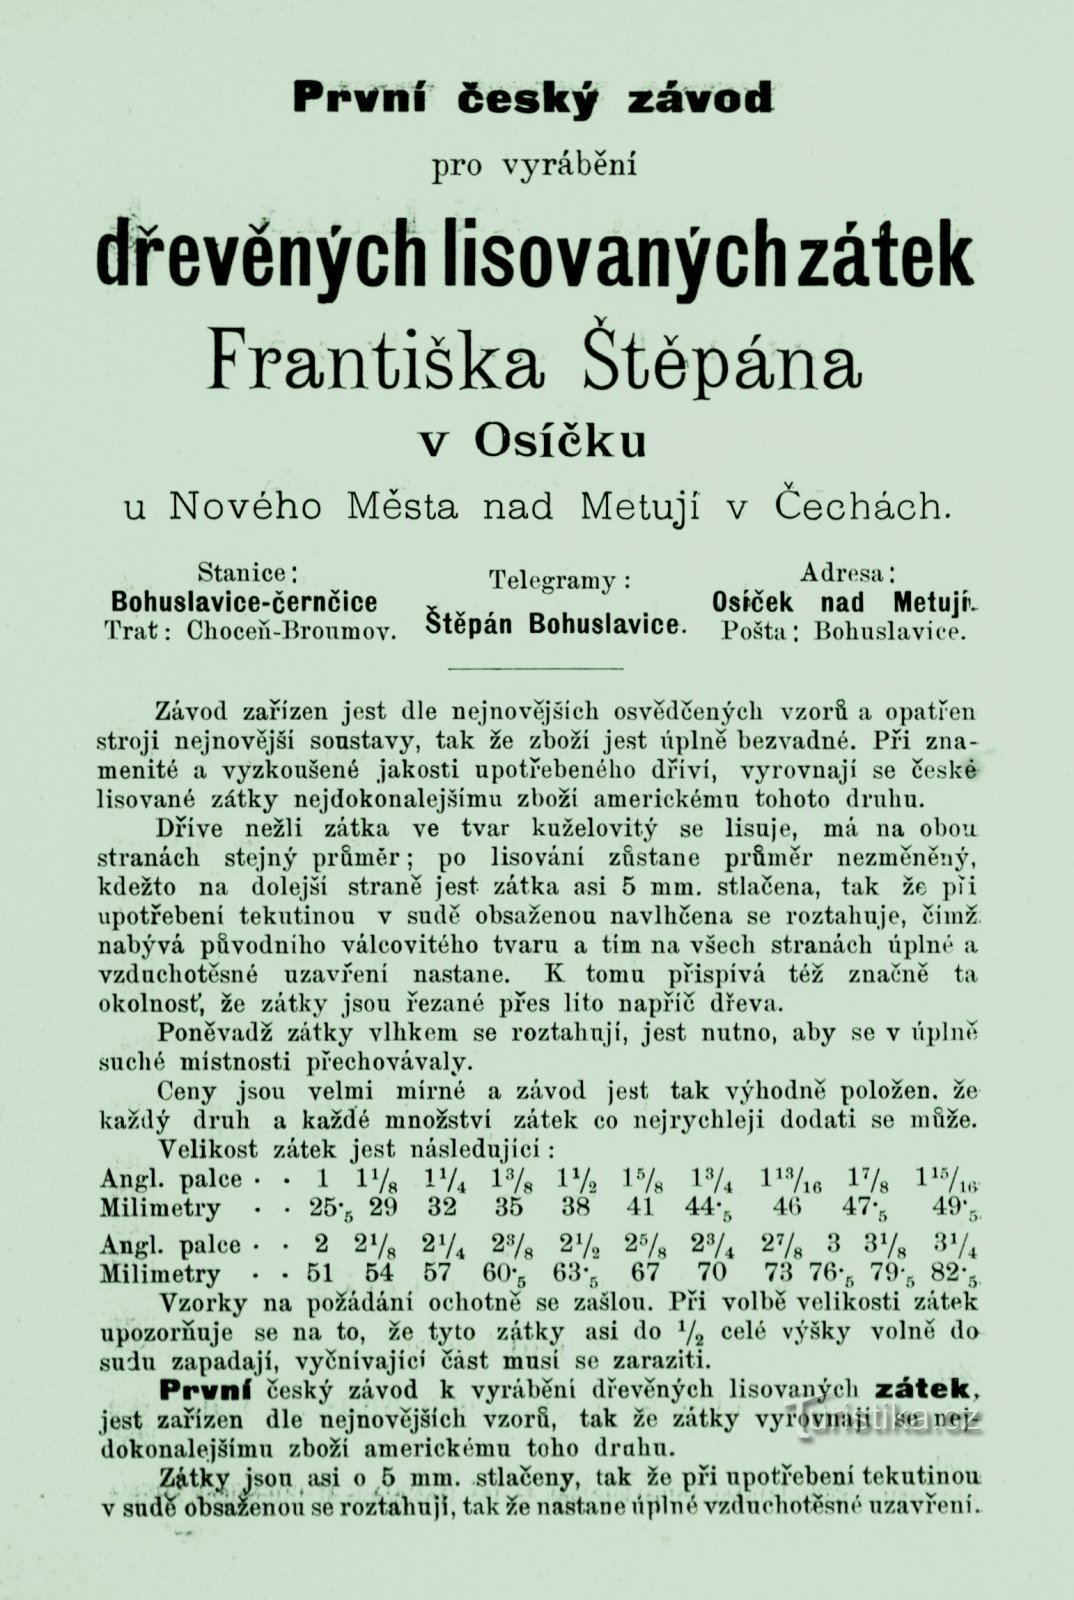 Annuncio d'epoca del mugnaio František Štěpán dal 1893